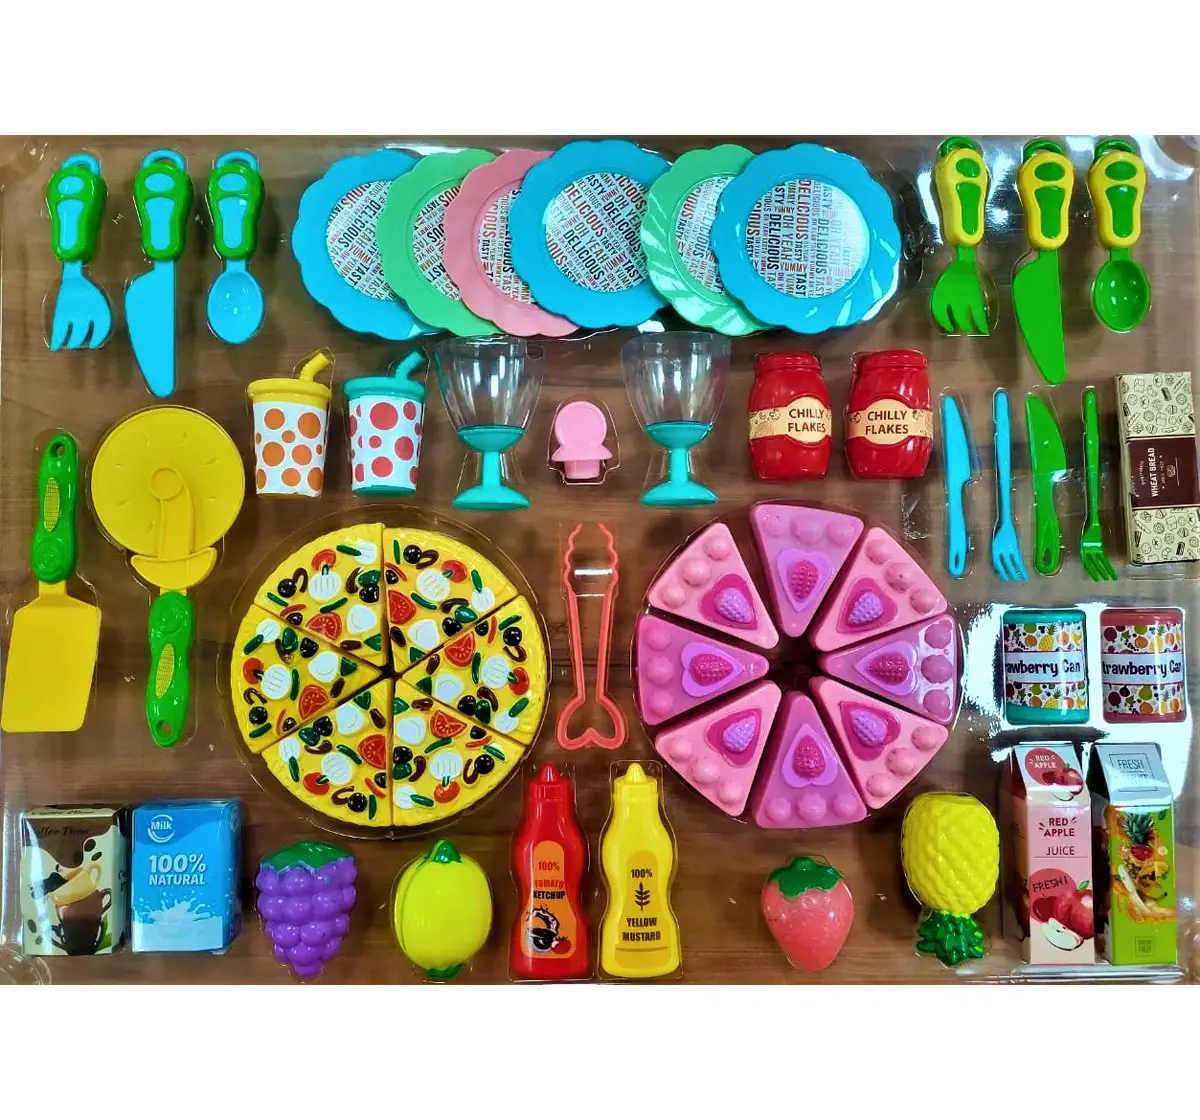 Kingdom Of Play Pizza & Cake Set Multicolour 3Y+